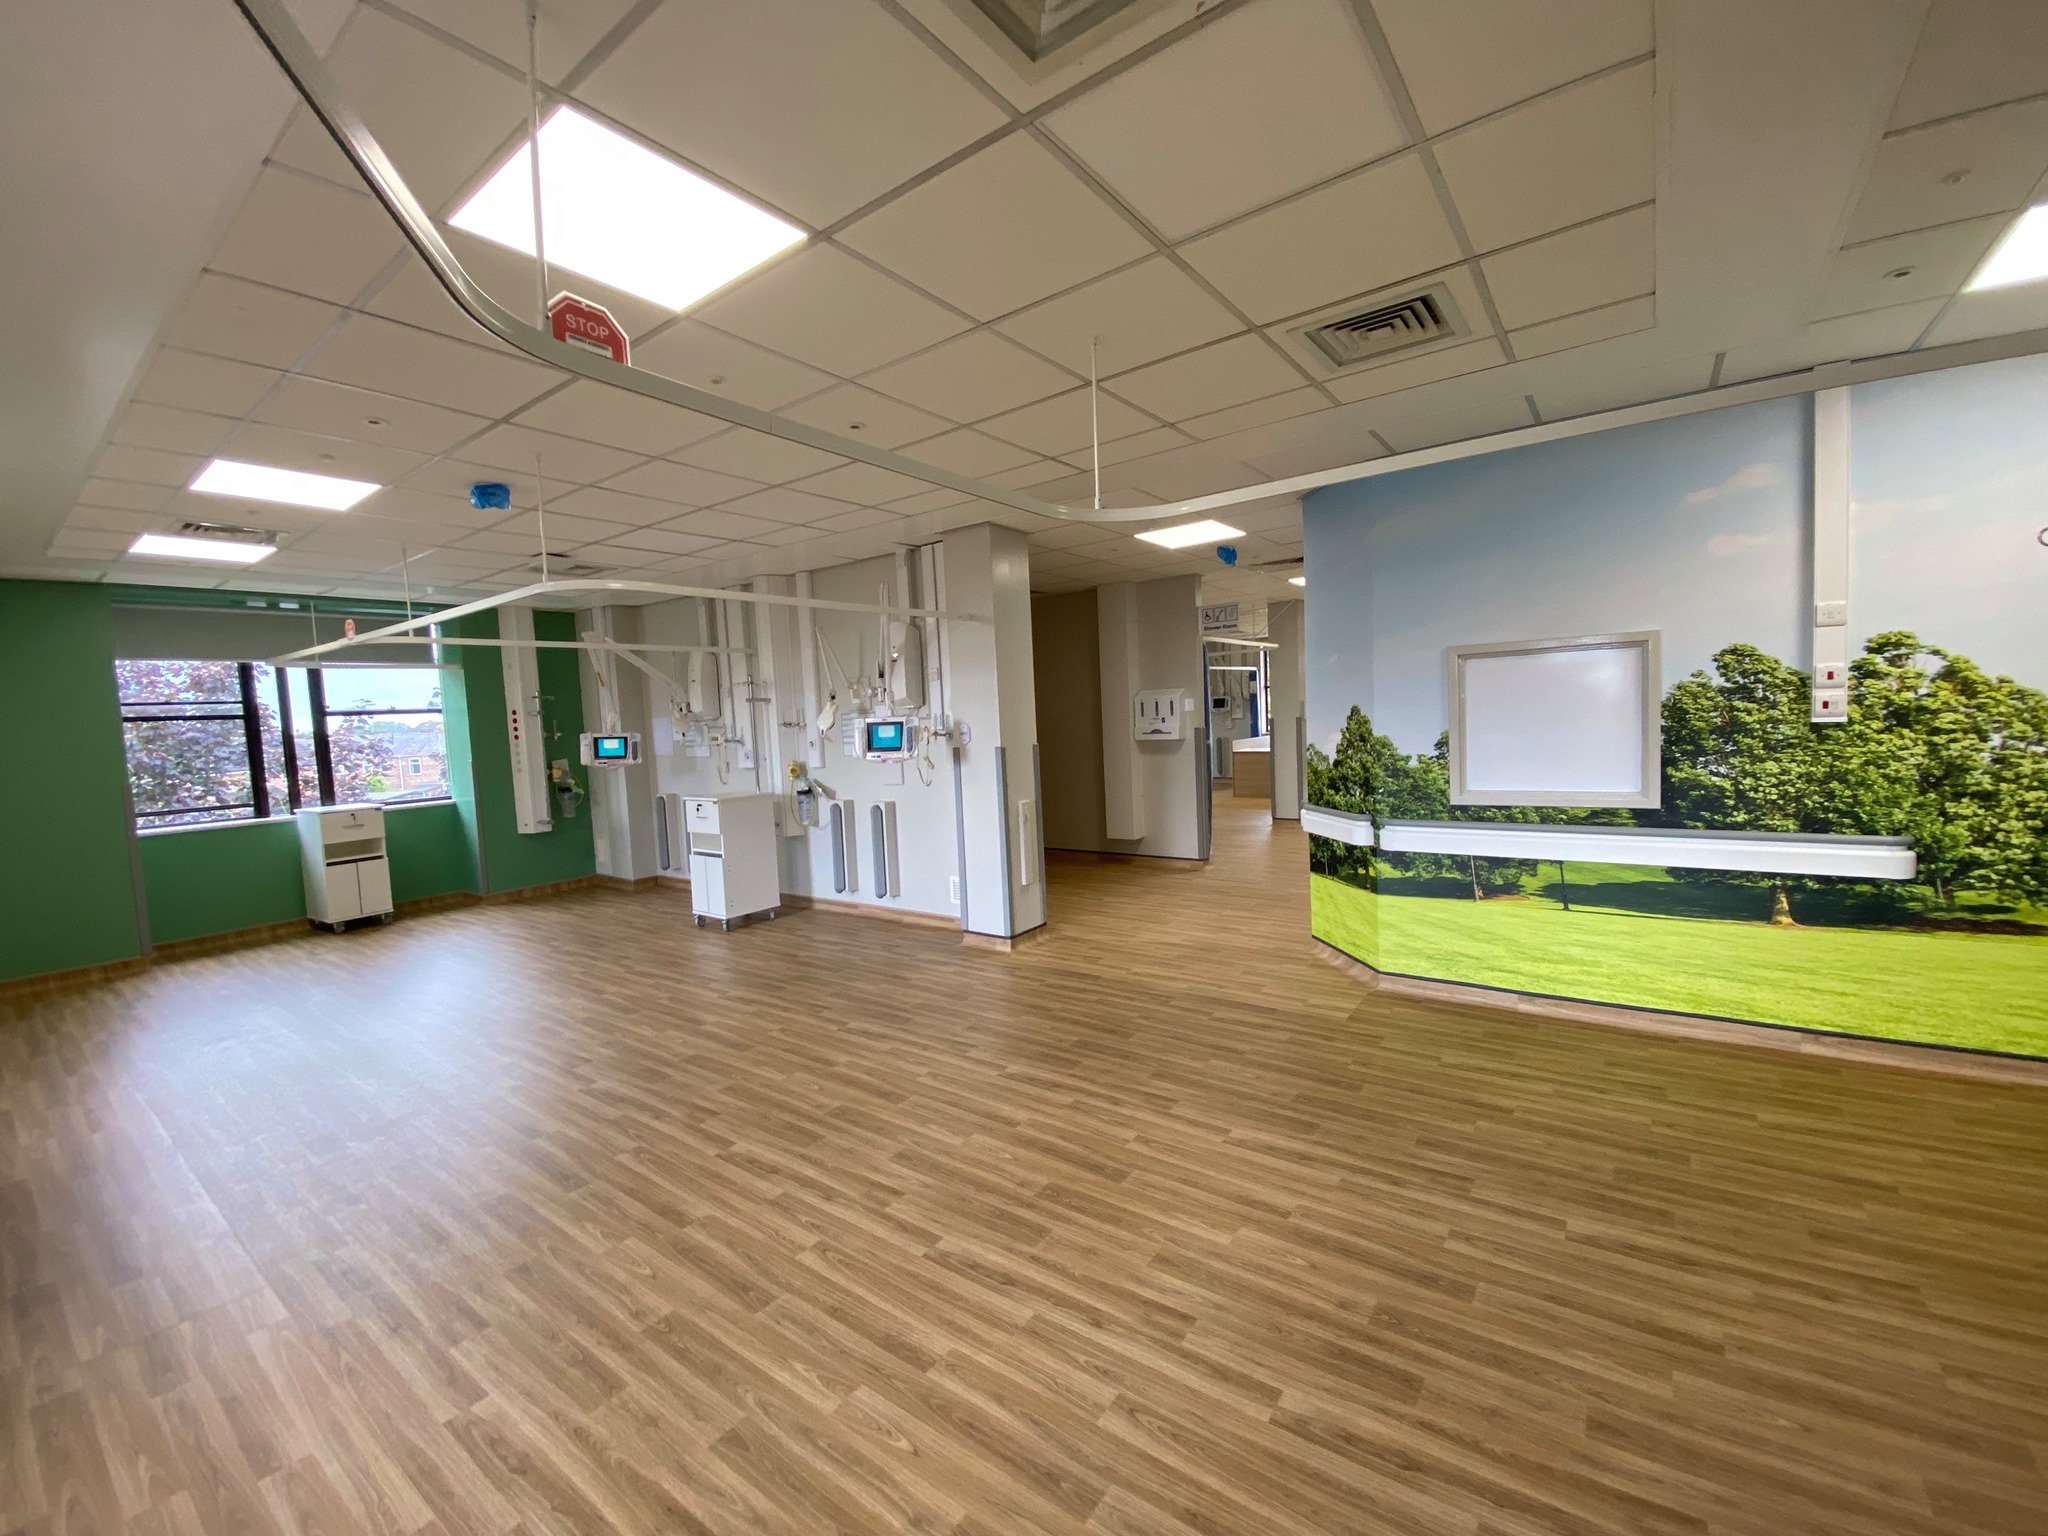 The new Acute Respiratory Unit at Warrington Hospital